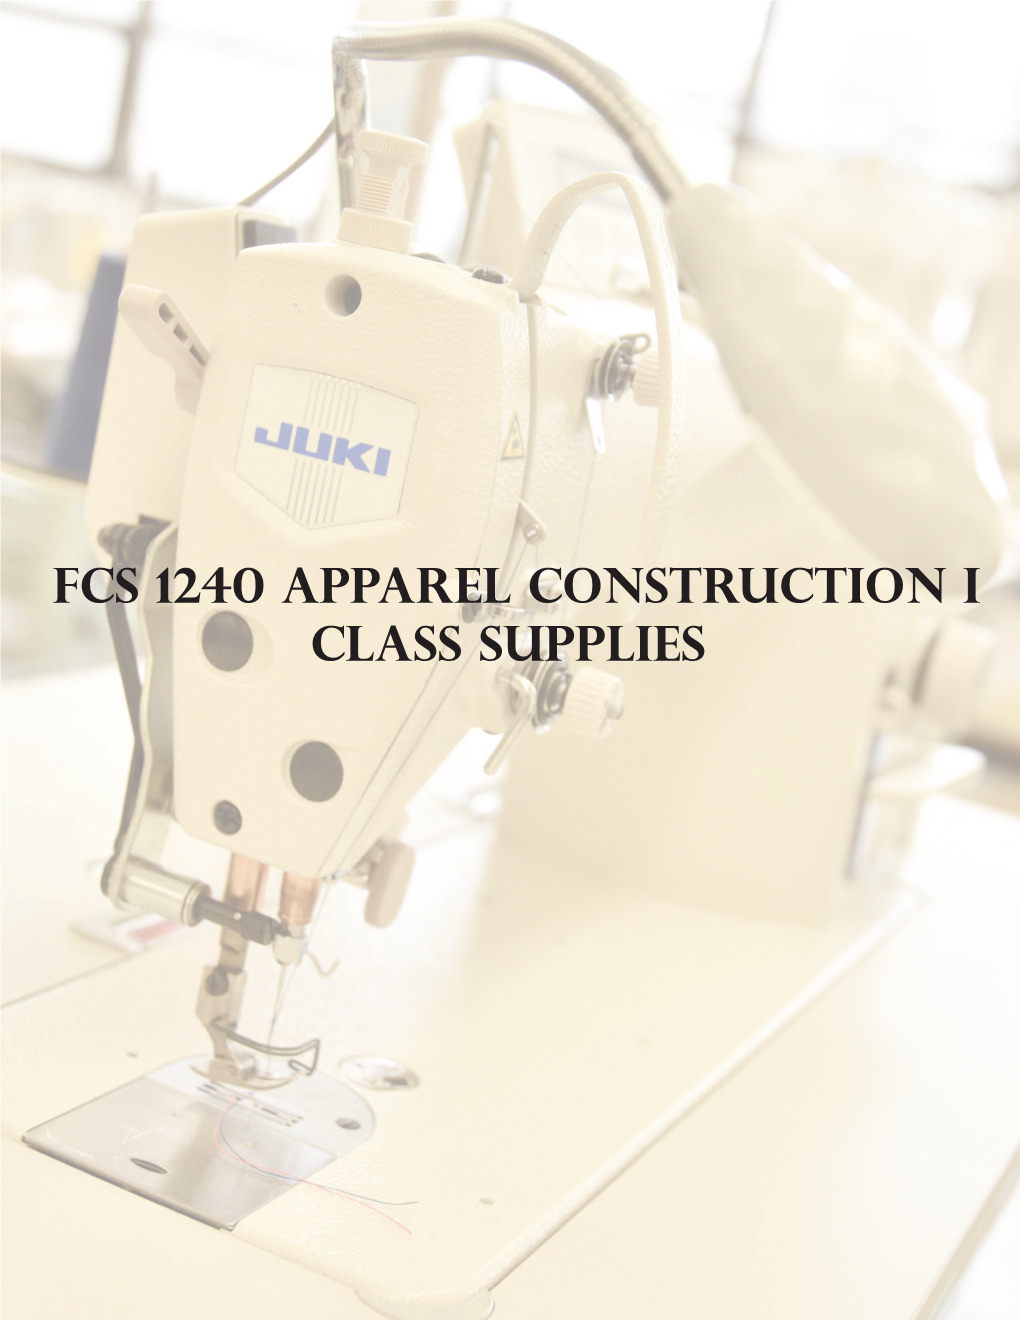 FCS 1240 (Apparel Construction I) Class Supplies List